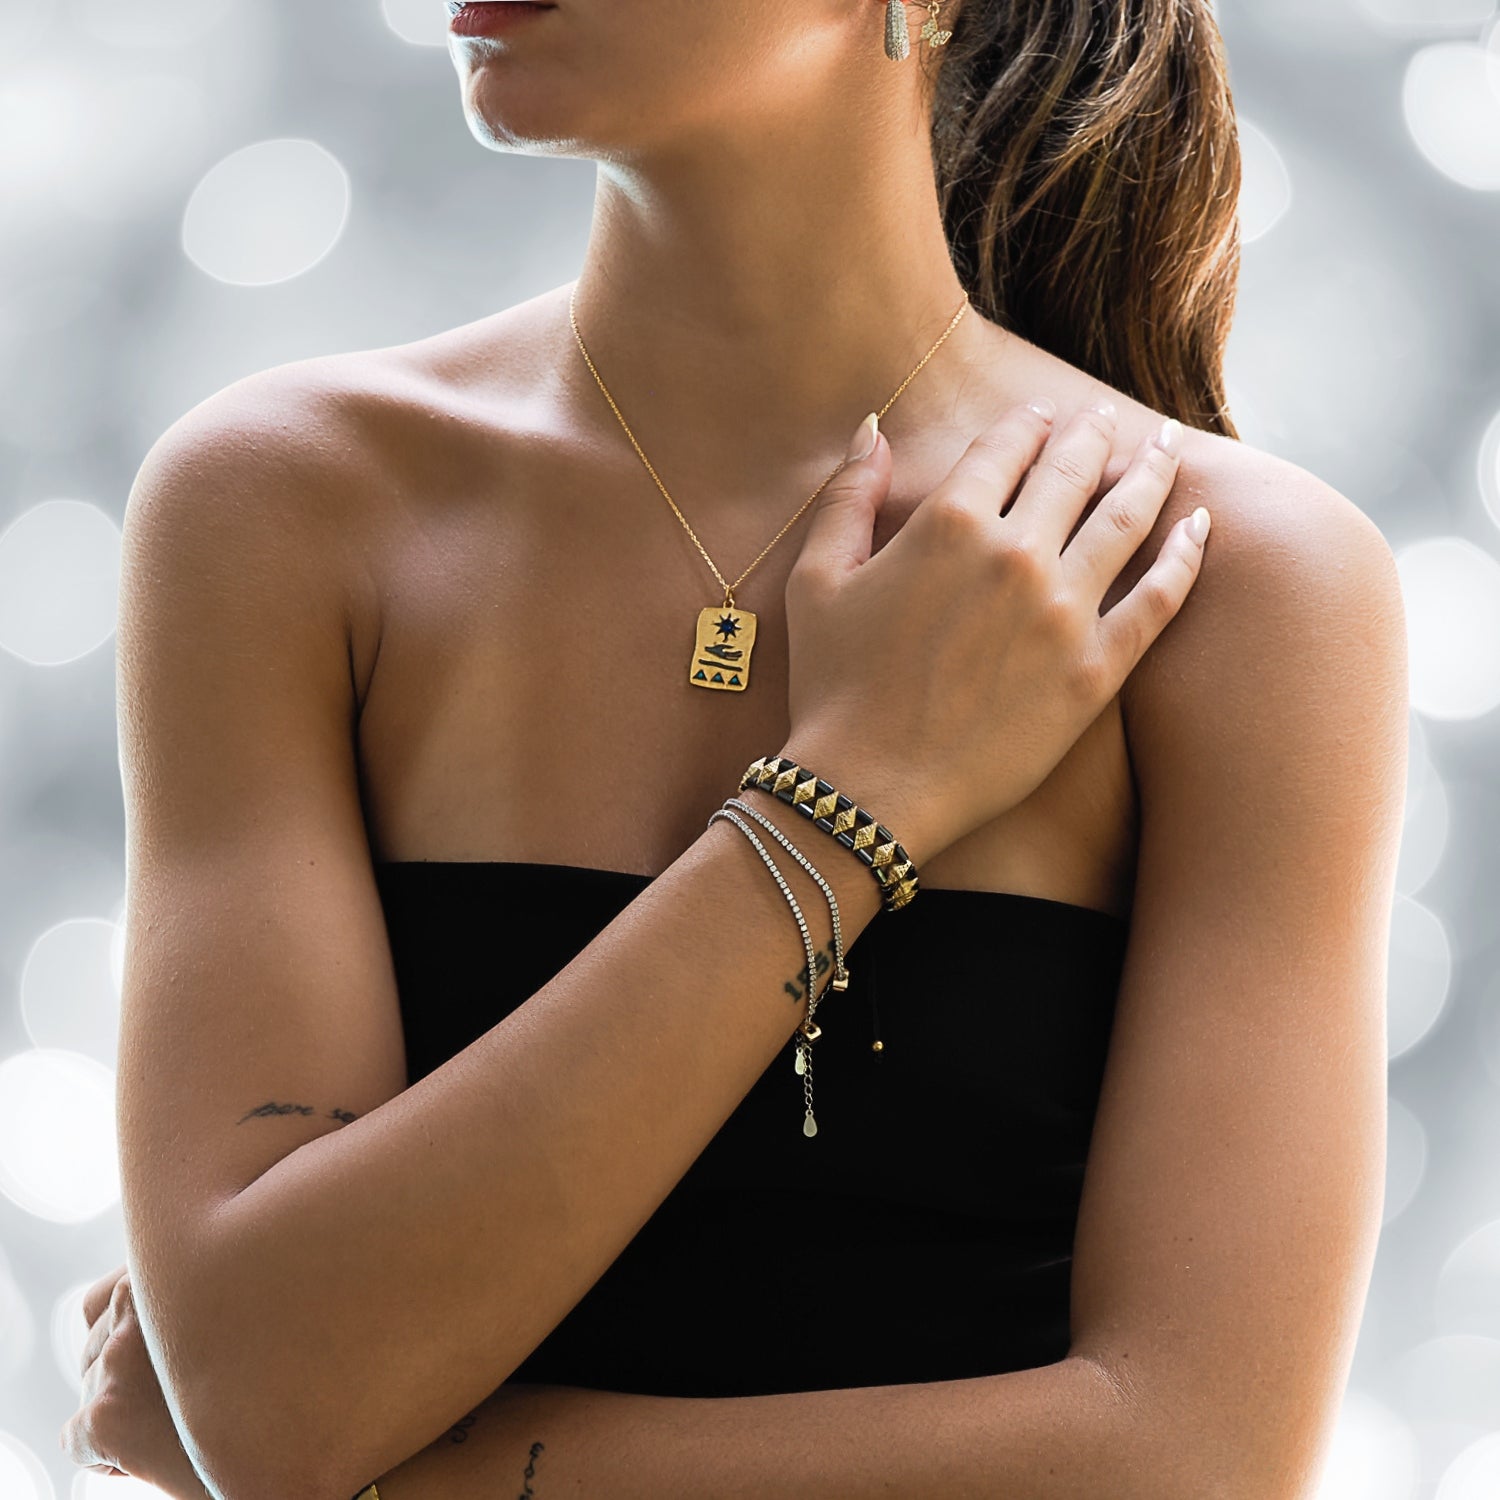 Luxury Geometric Hematite Jewelry on a Model's Wrist - Elegance Personified